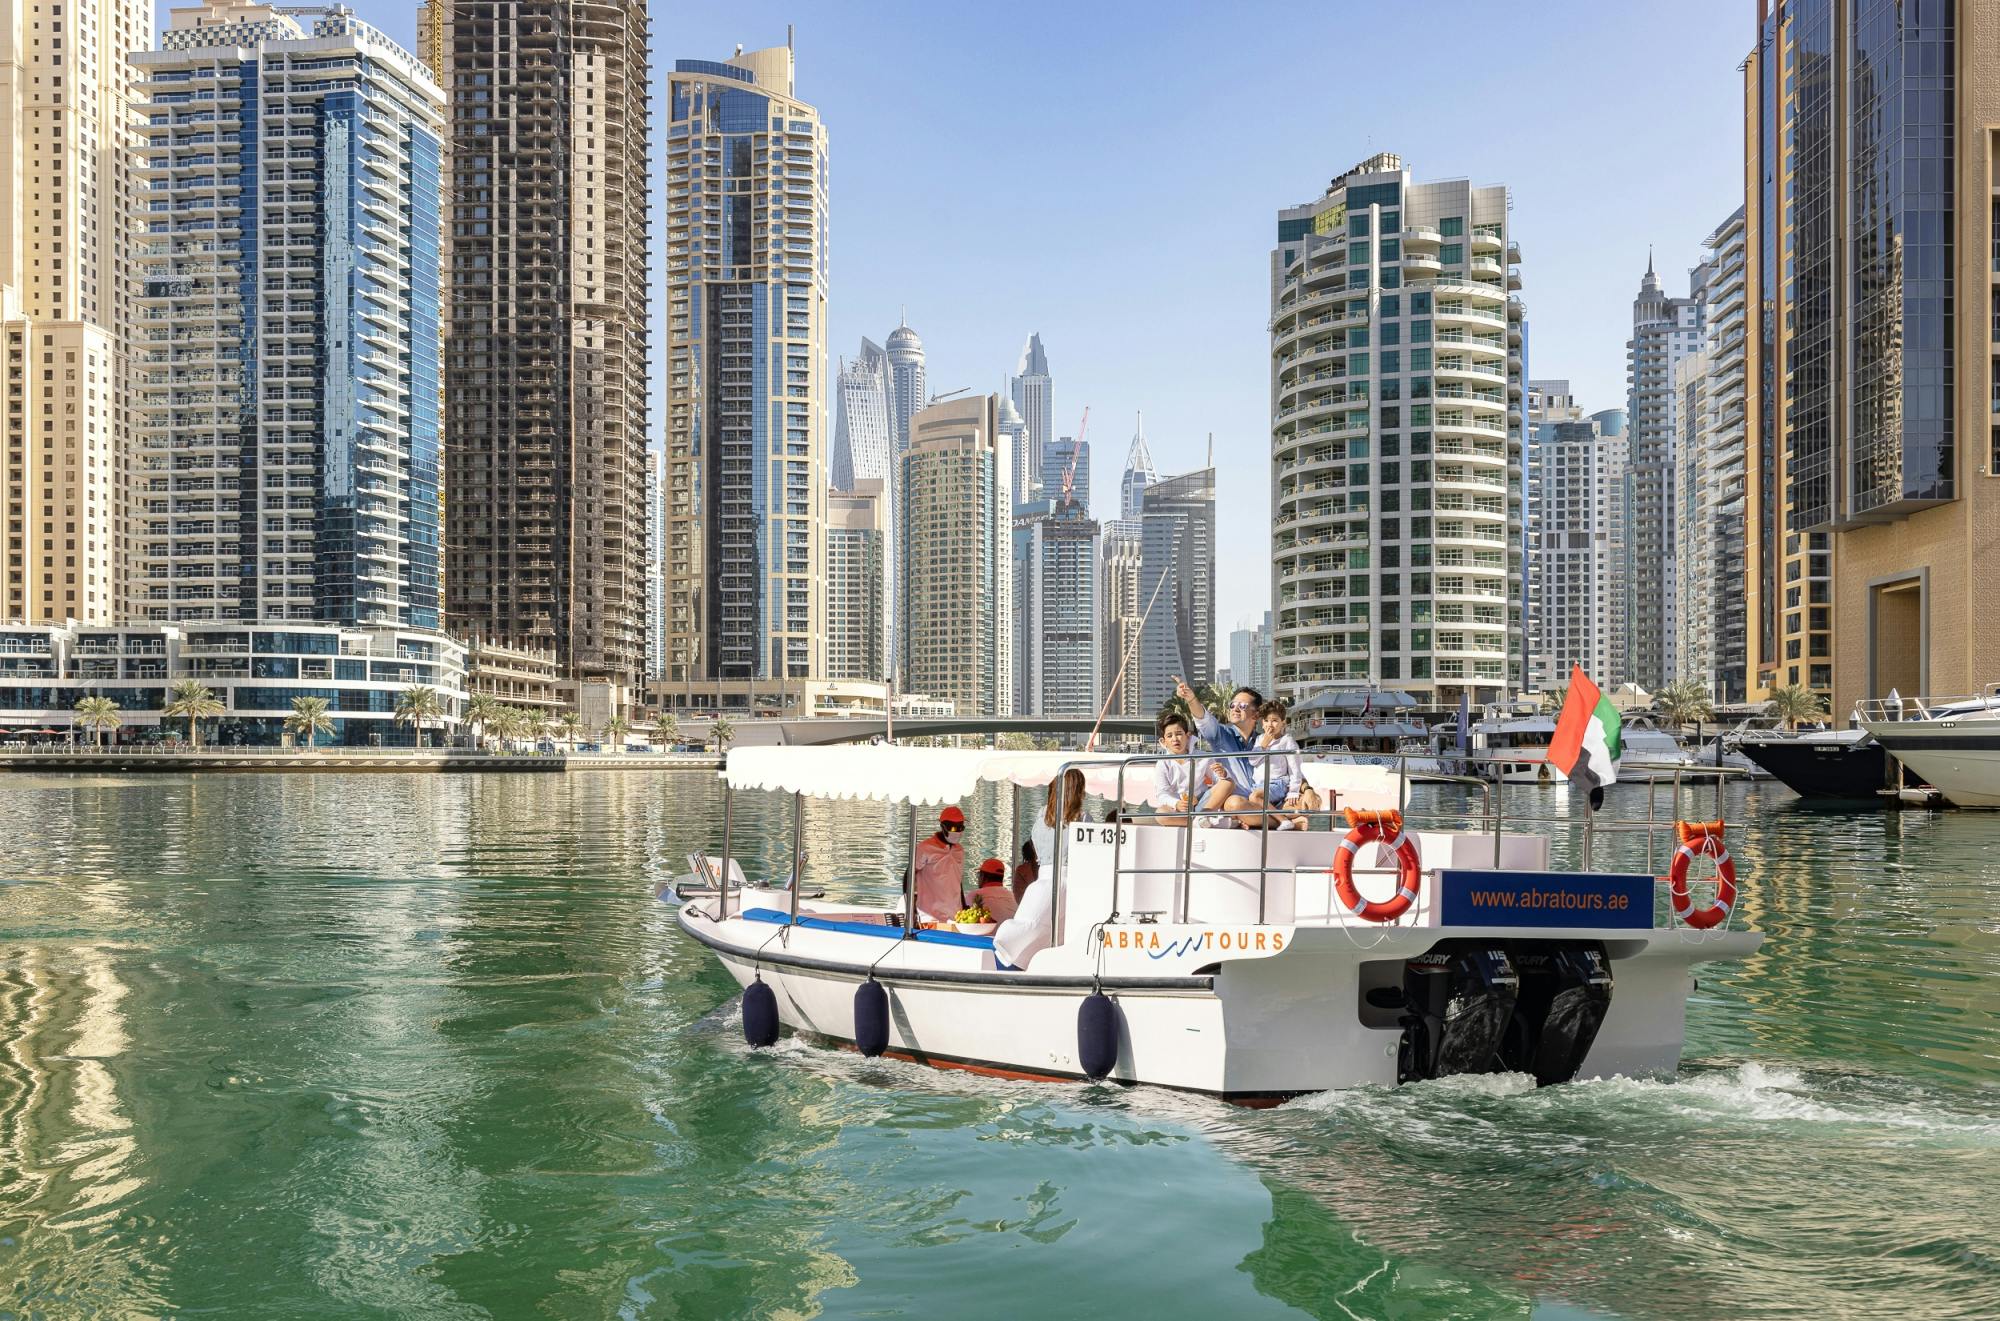 60-minütige moderne Abra-Bootstour durch Dubai Marina und Ain Dubai